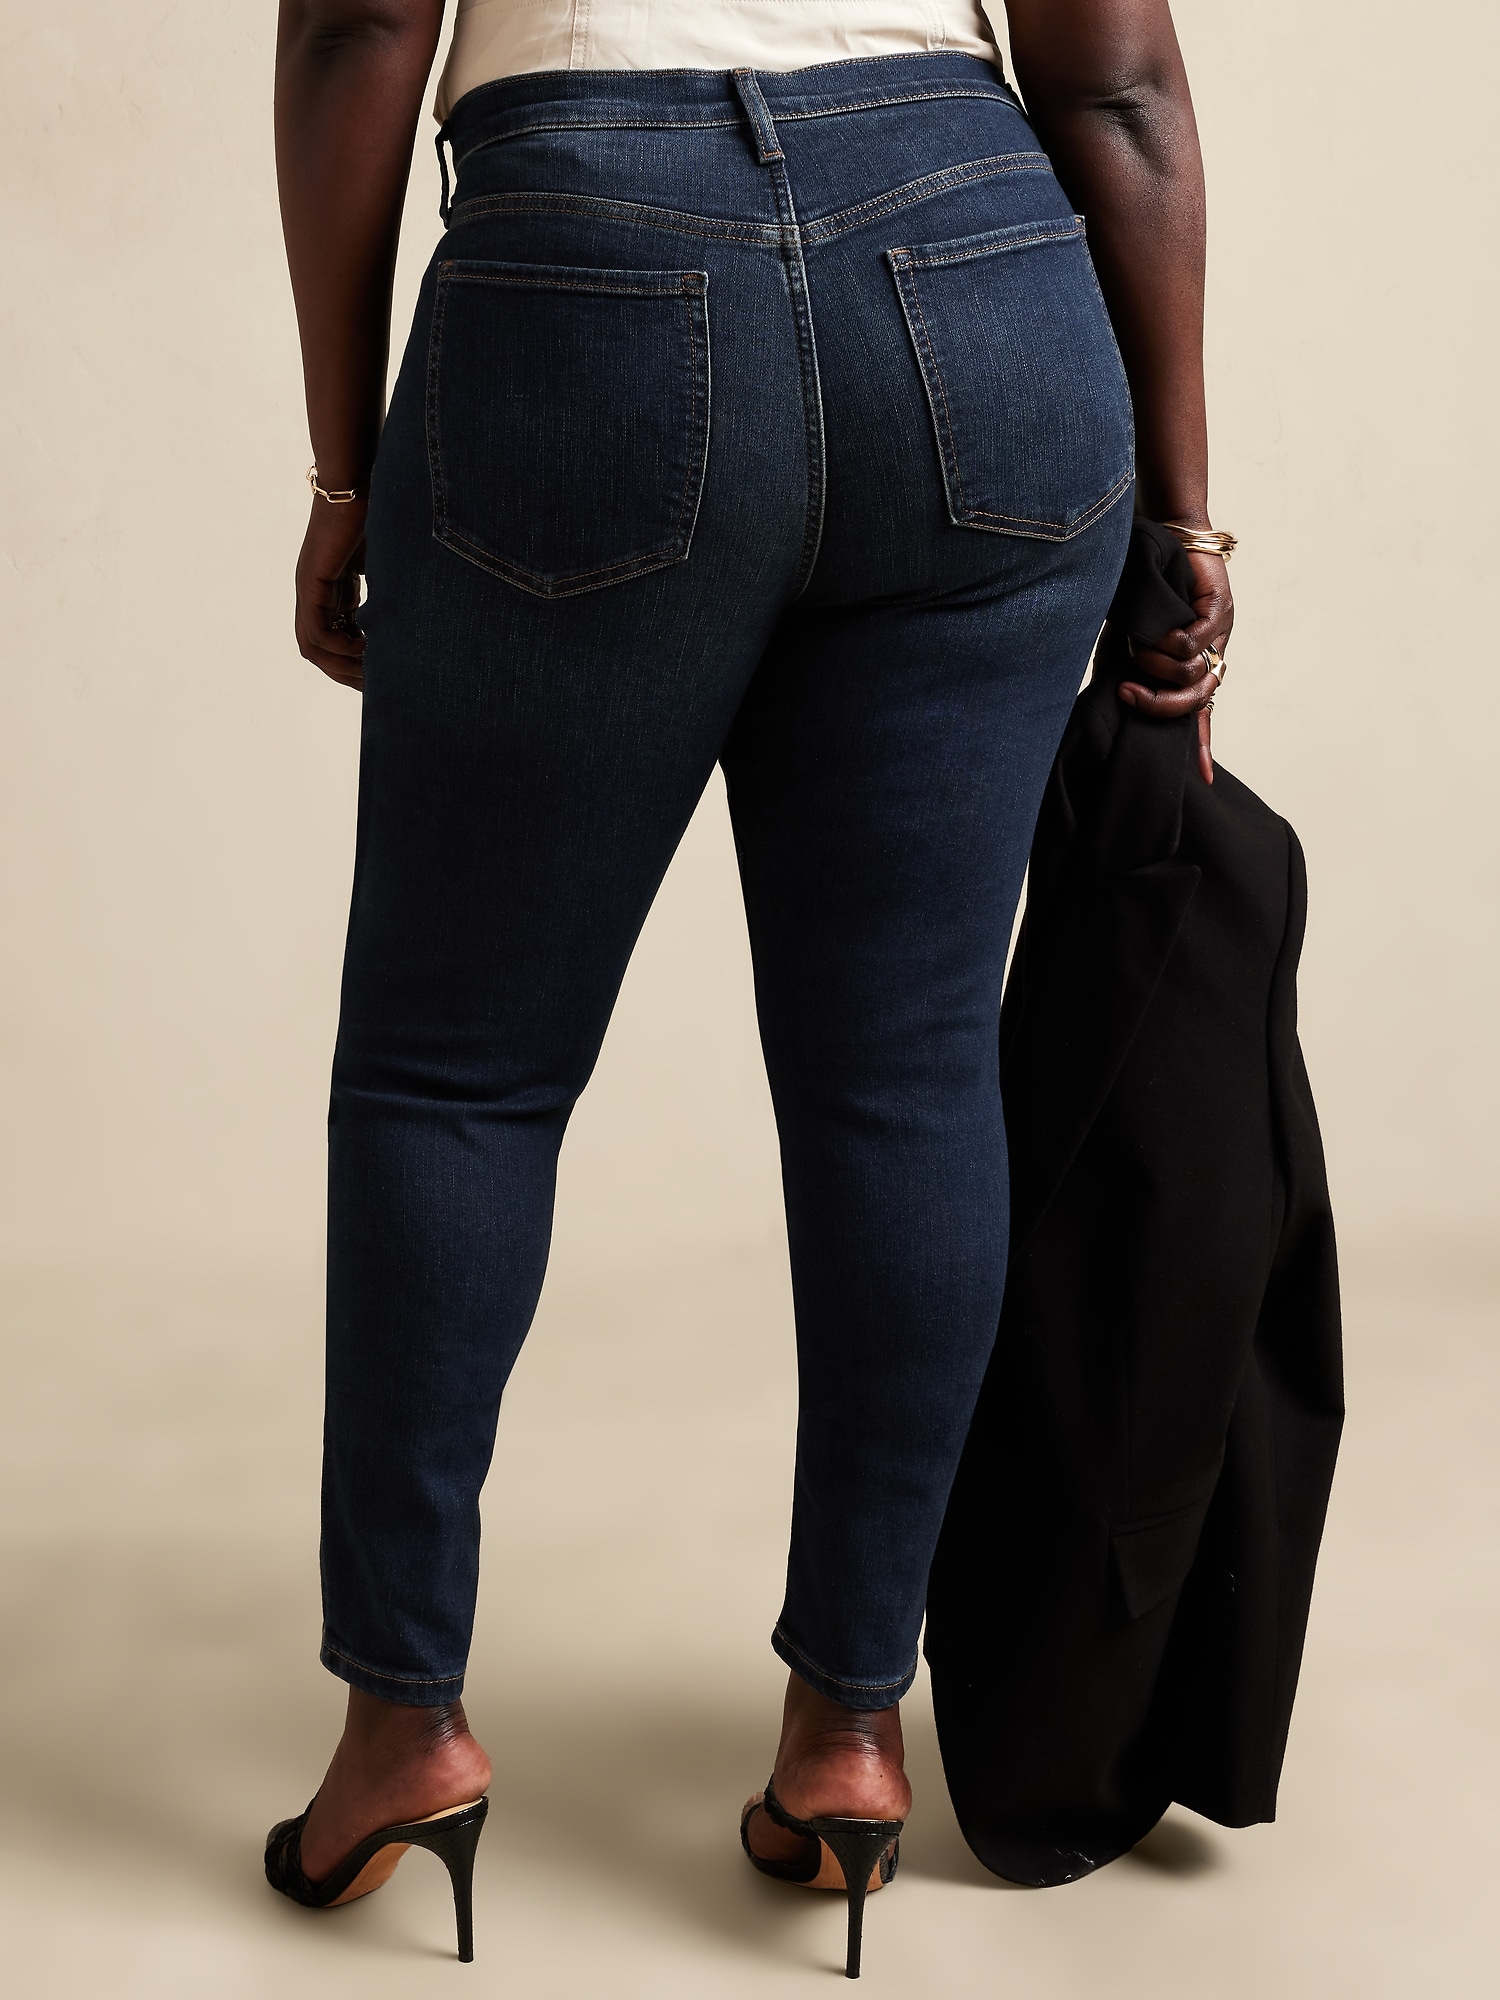 Sexy Women's stretch Denim Jumpsuit Overalls skinny slim Jeans Dark Blue UK  6-14 | eBay